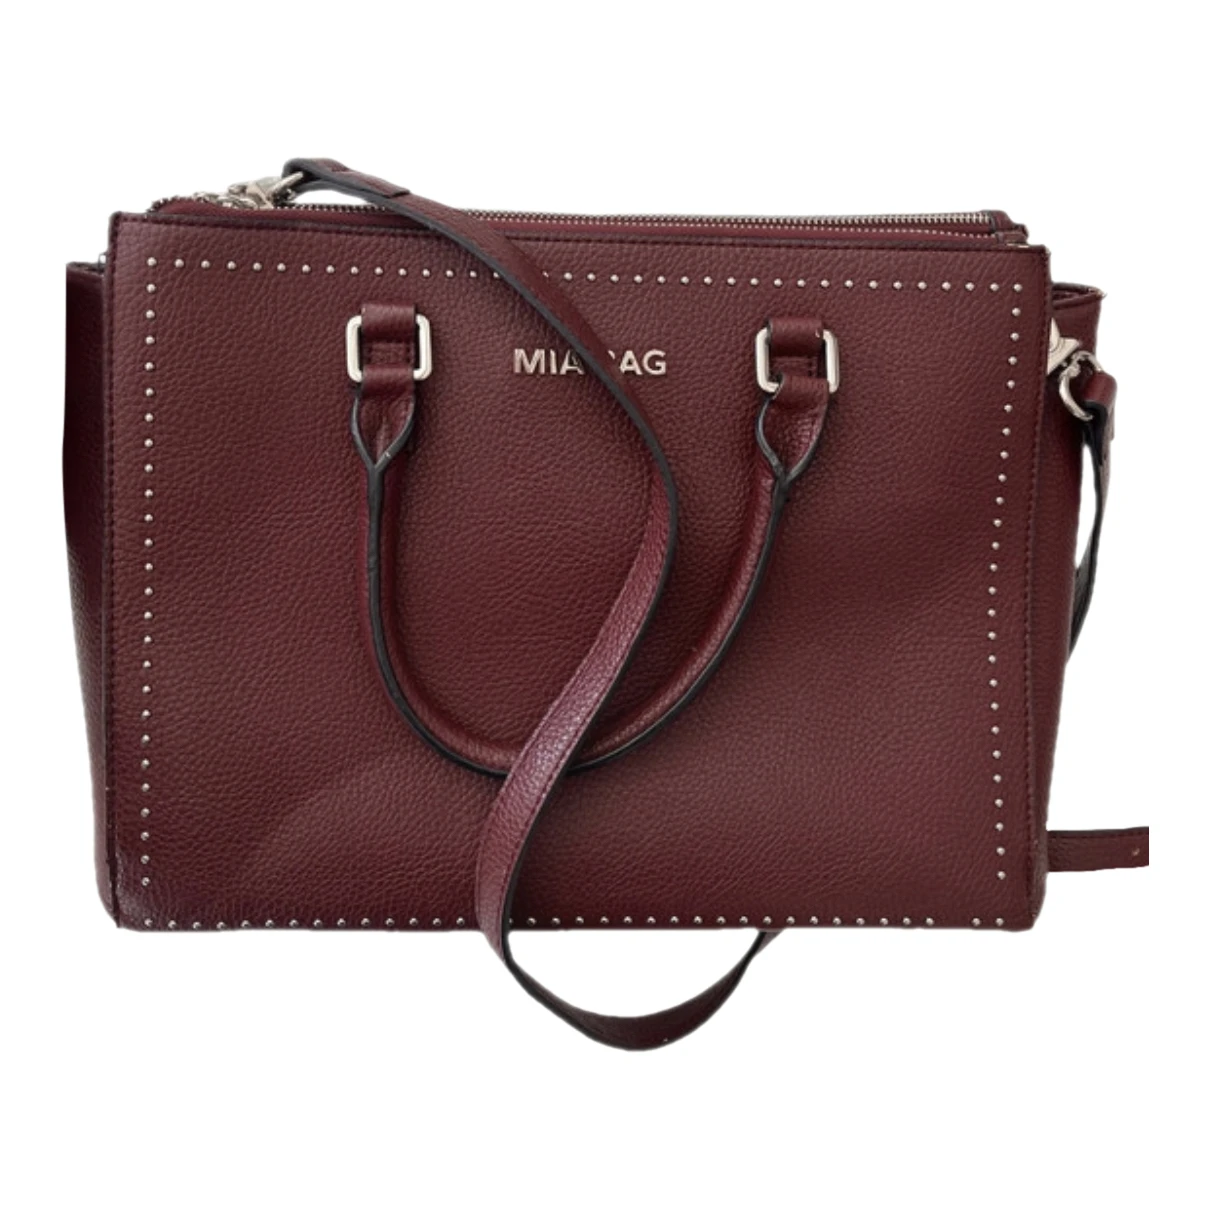 Pre-owned Mia Bag Handbag In Burgundy